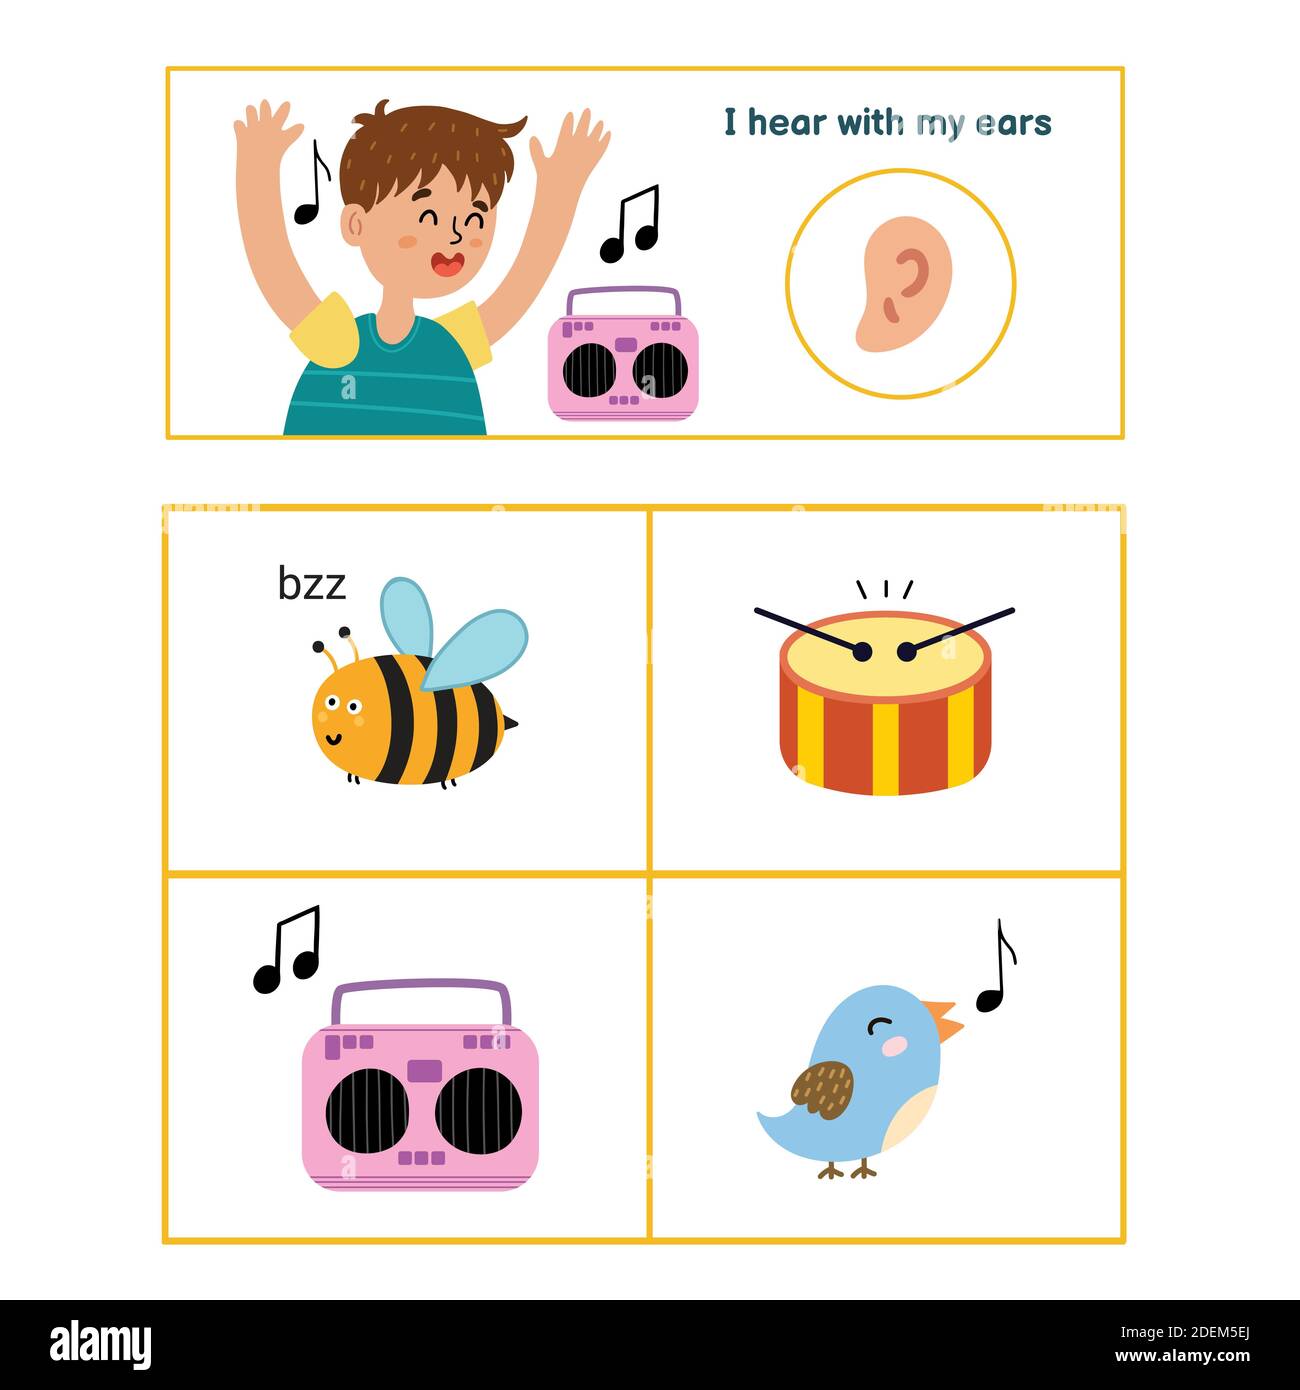 Five senses poster. Hearing sense presentation page for kids Stock Vector